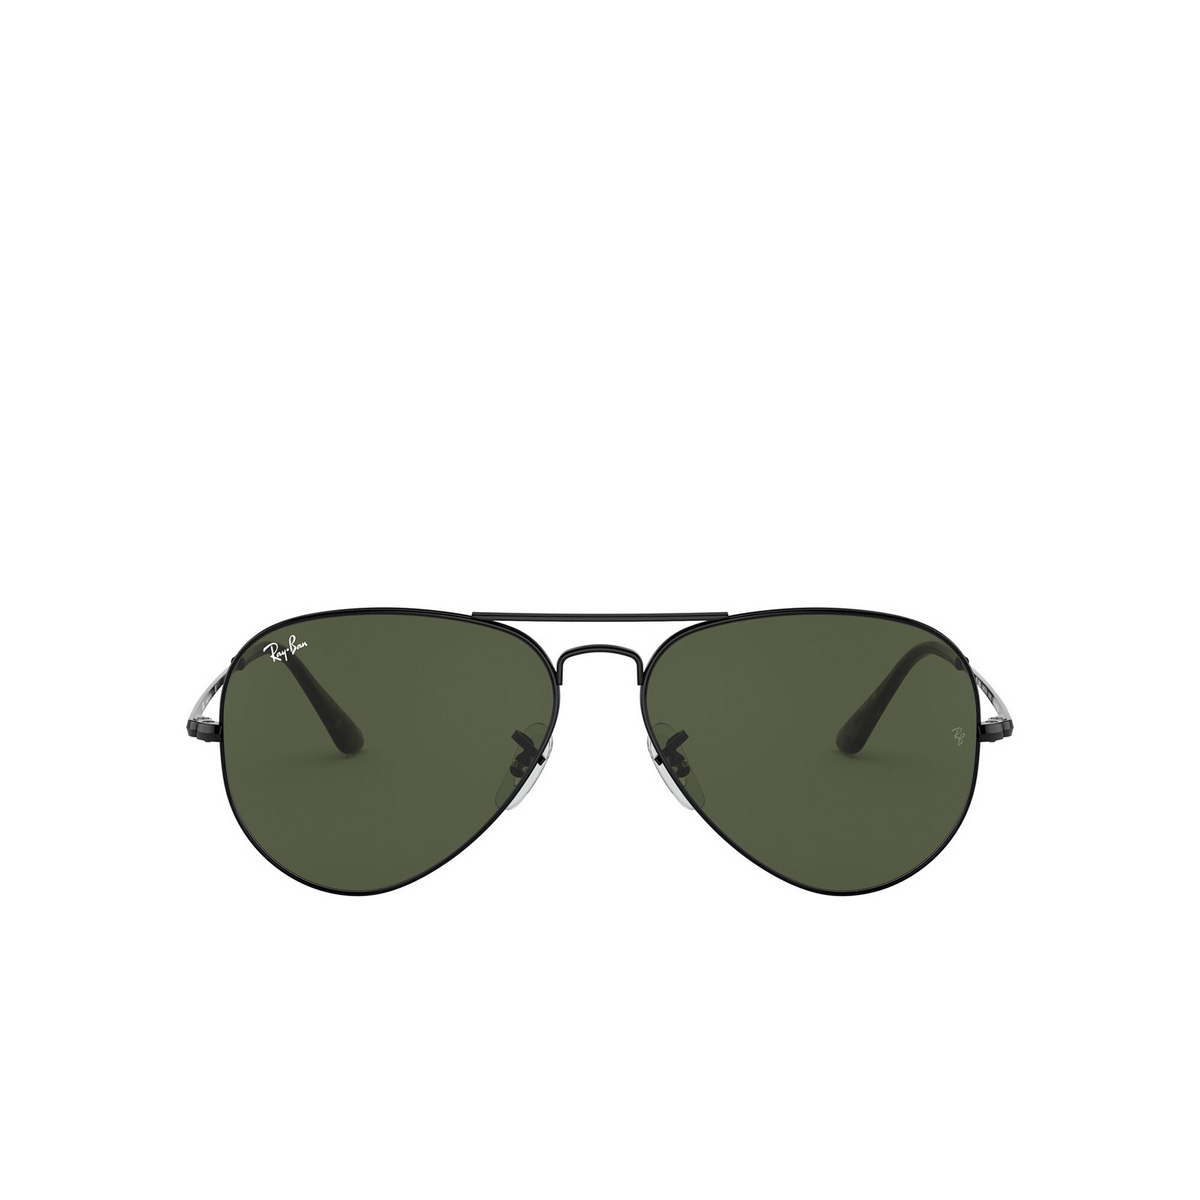 Ray-Ban AVIATOR METAL II Sunglasses 914831 Black - front view